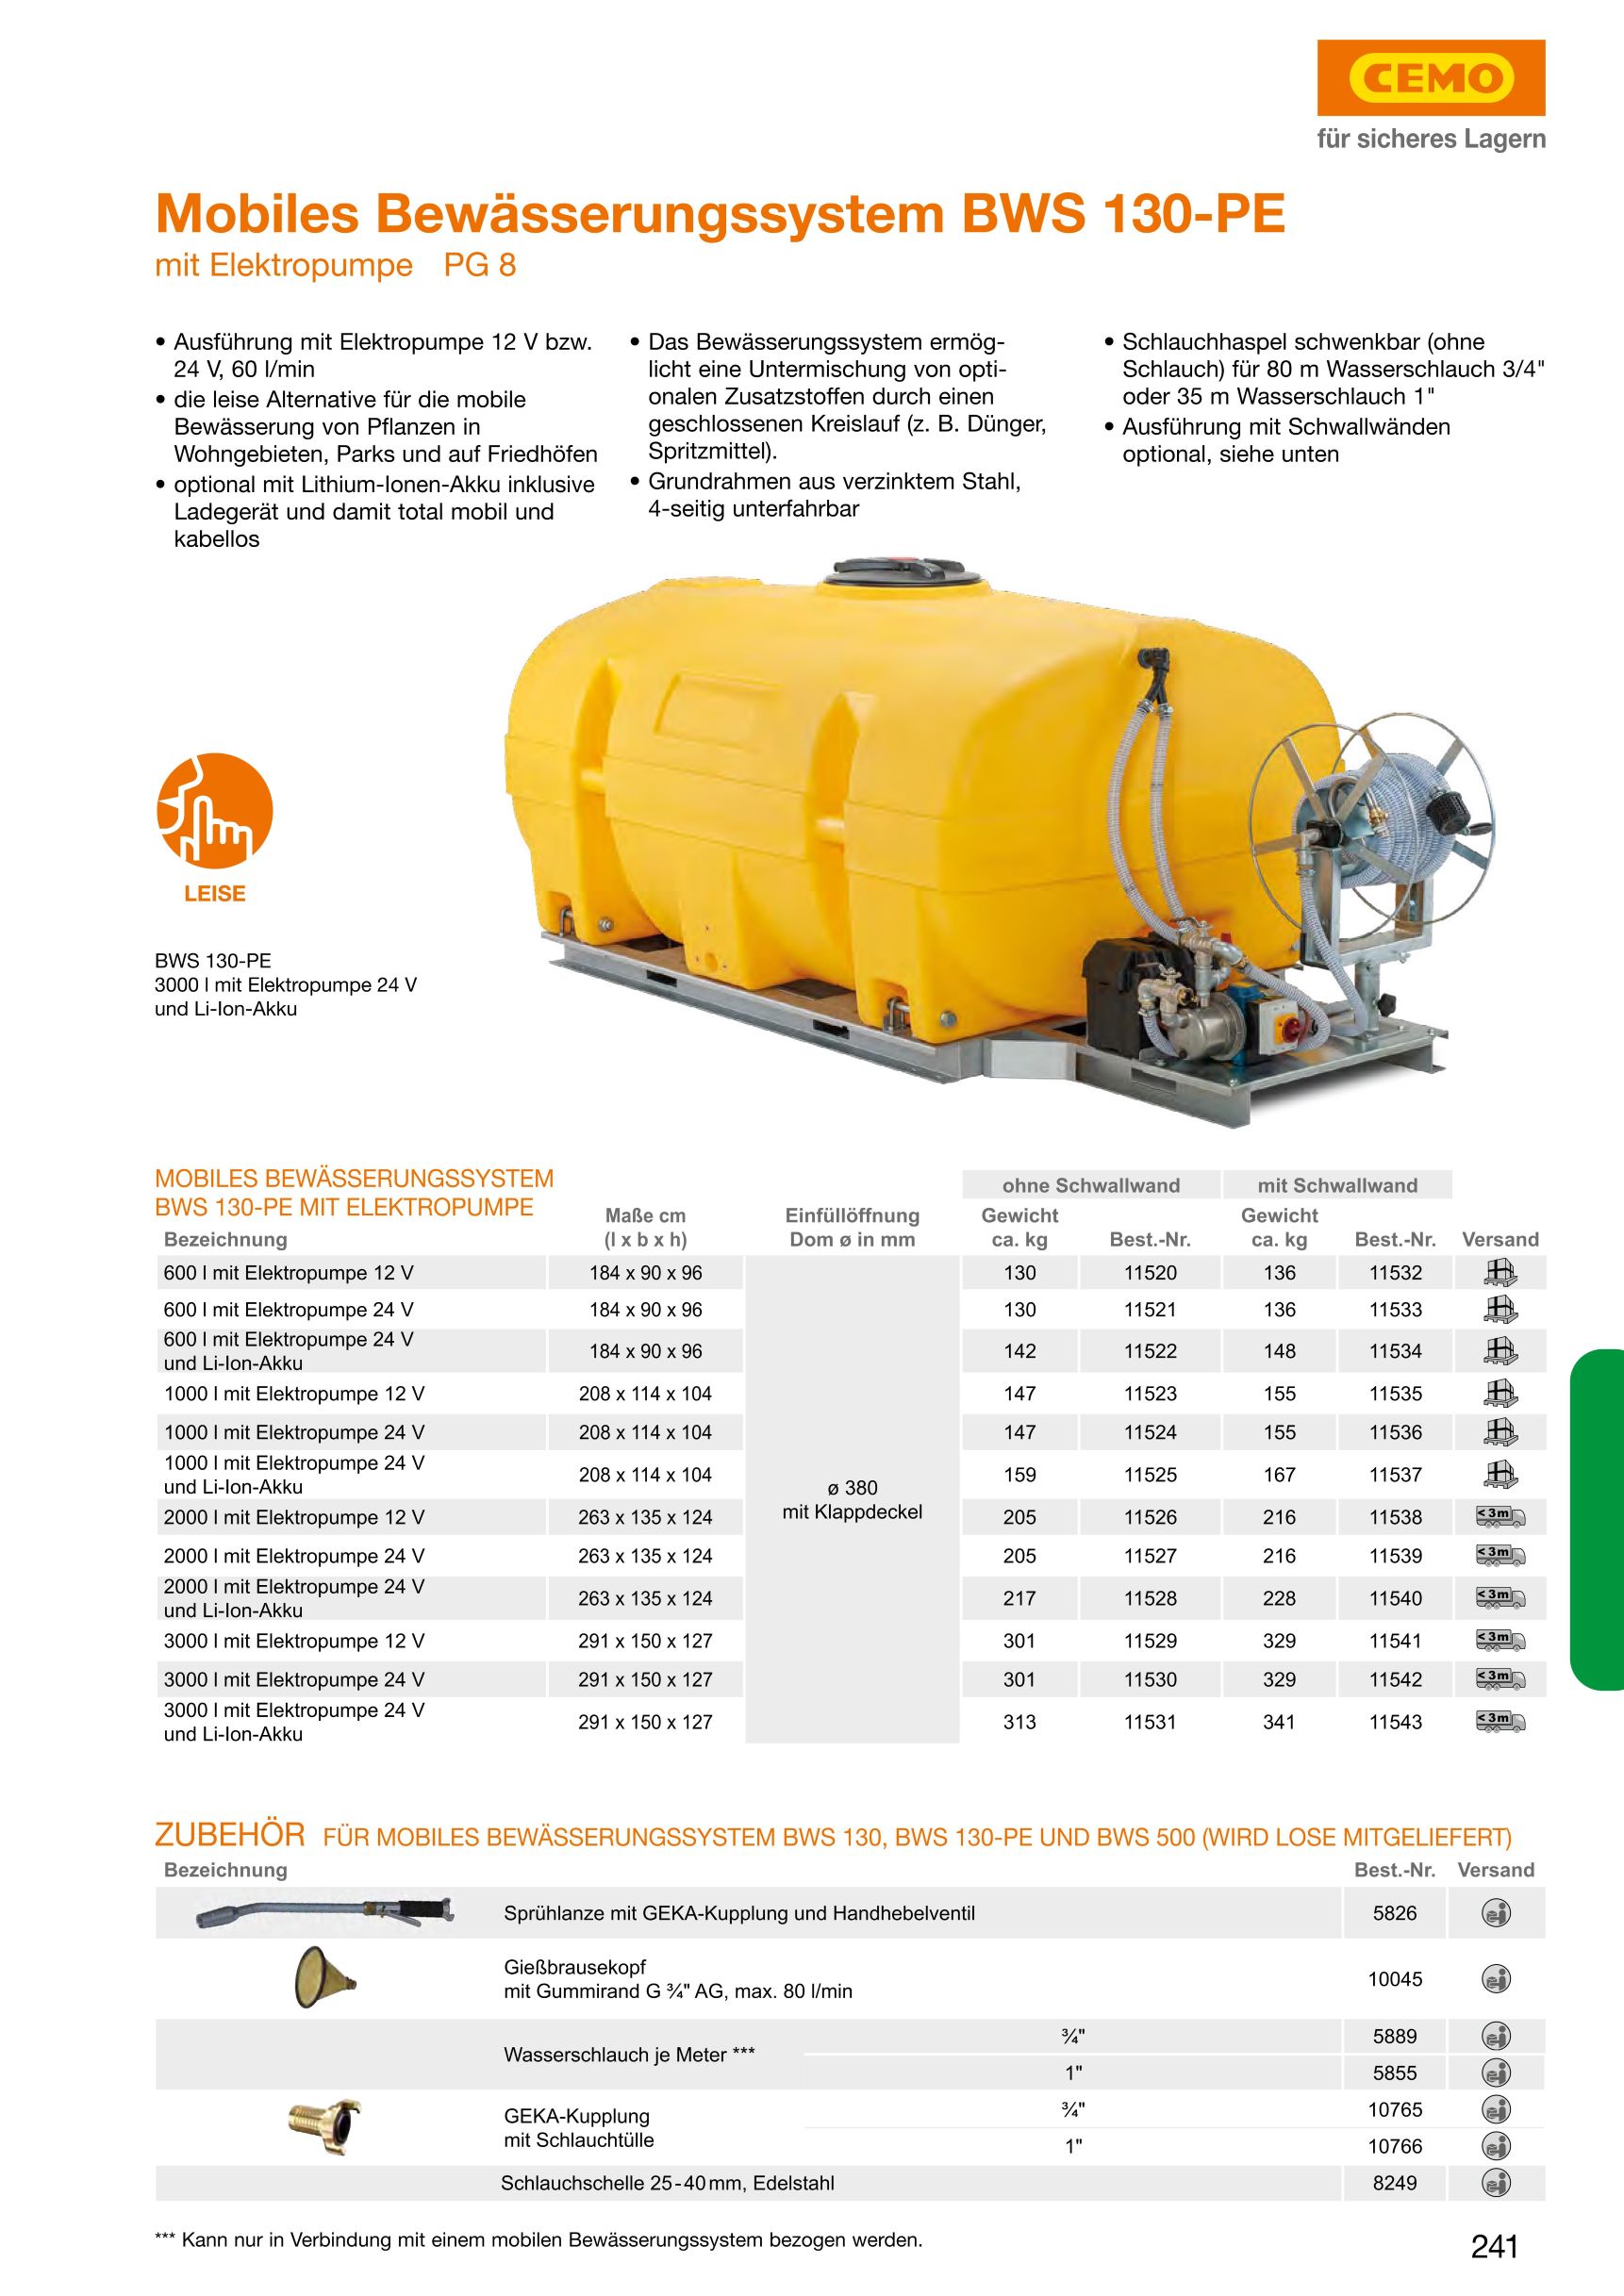 CEMO Mobiles Bewässerungssystem BWS 130-PE, 2000 l, 24 V Pumpe, Akku, Schwallwände - 11540